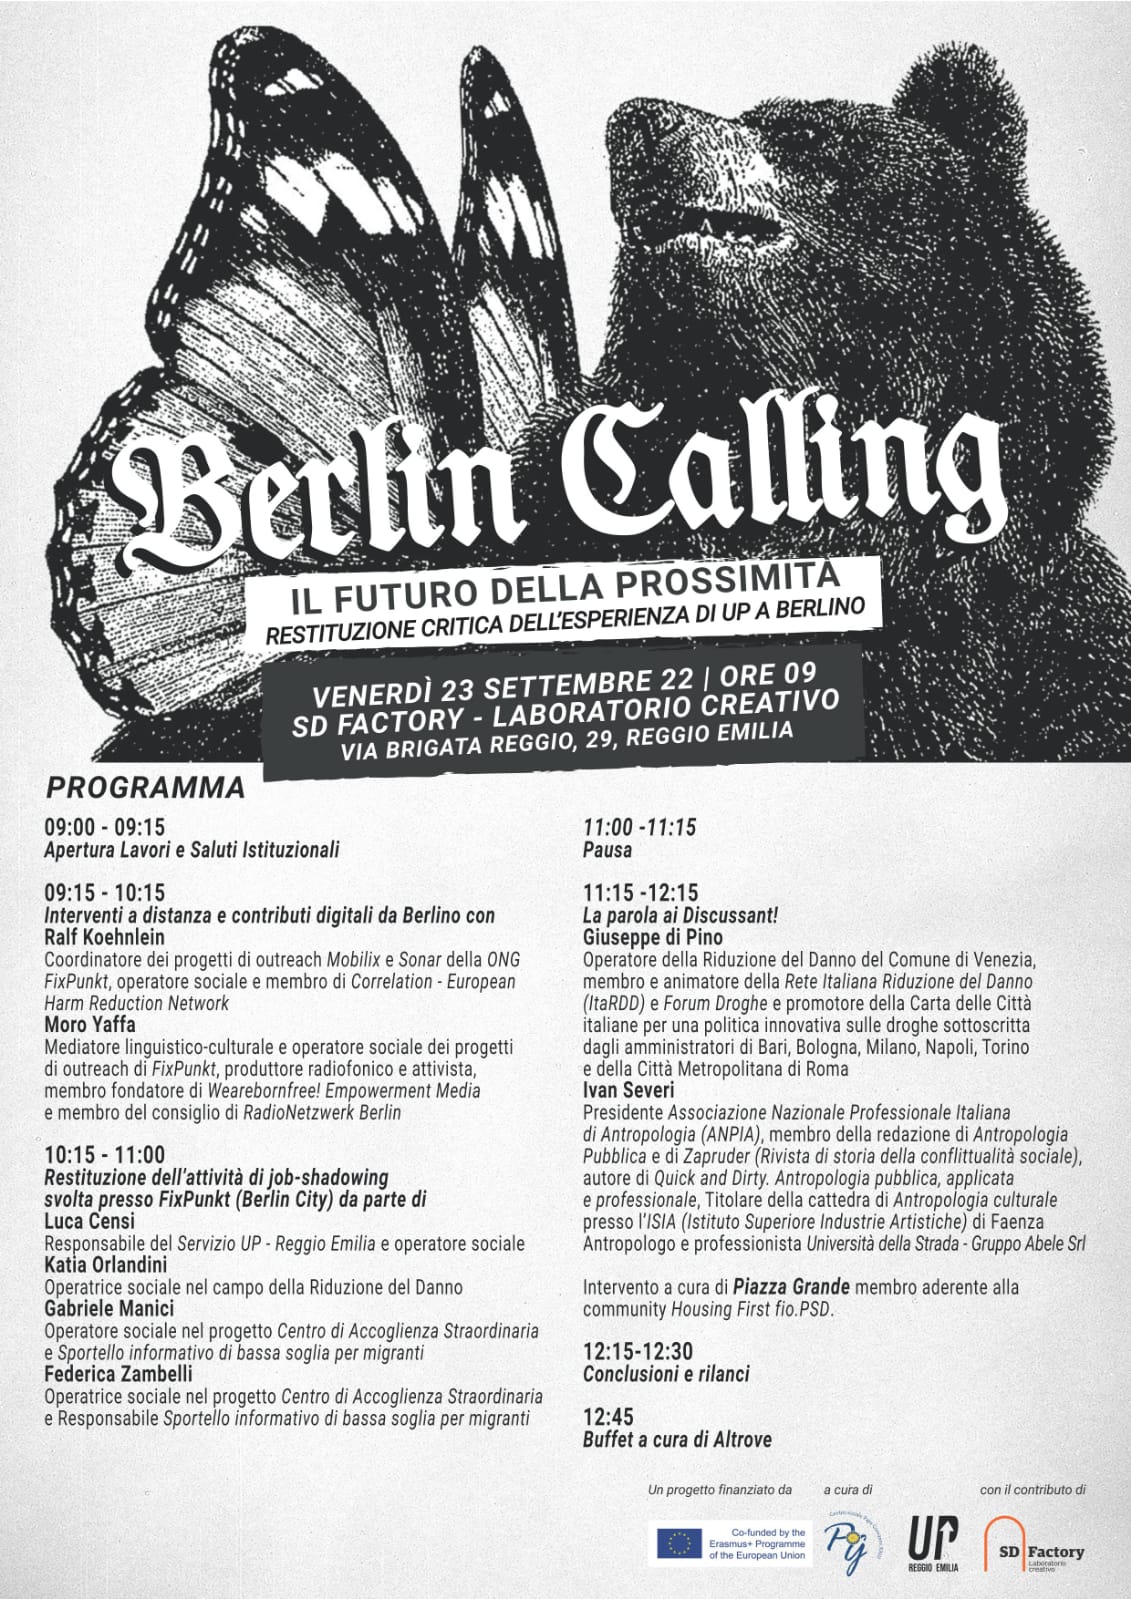 berlin calling